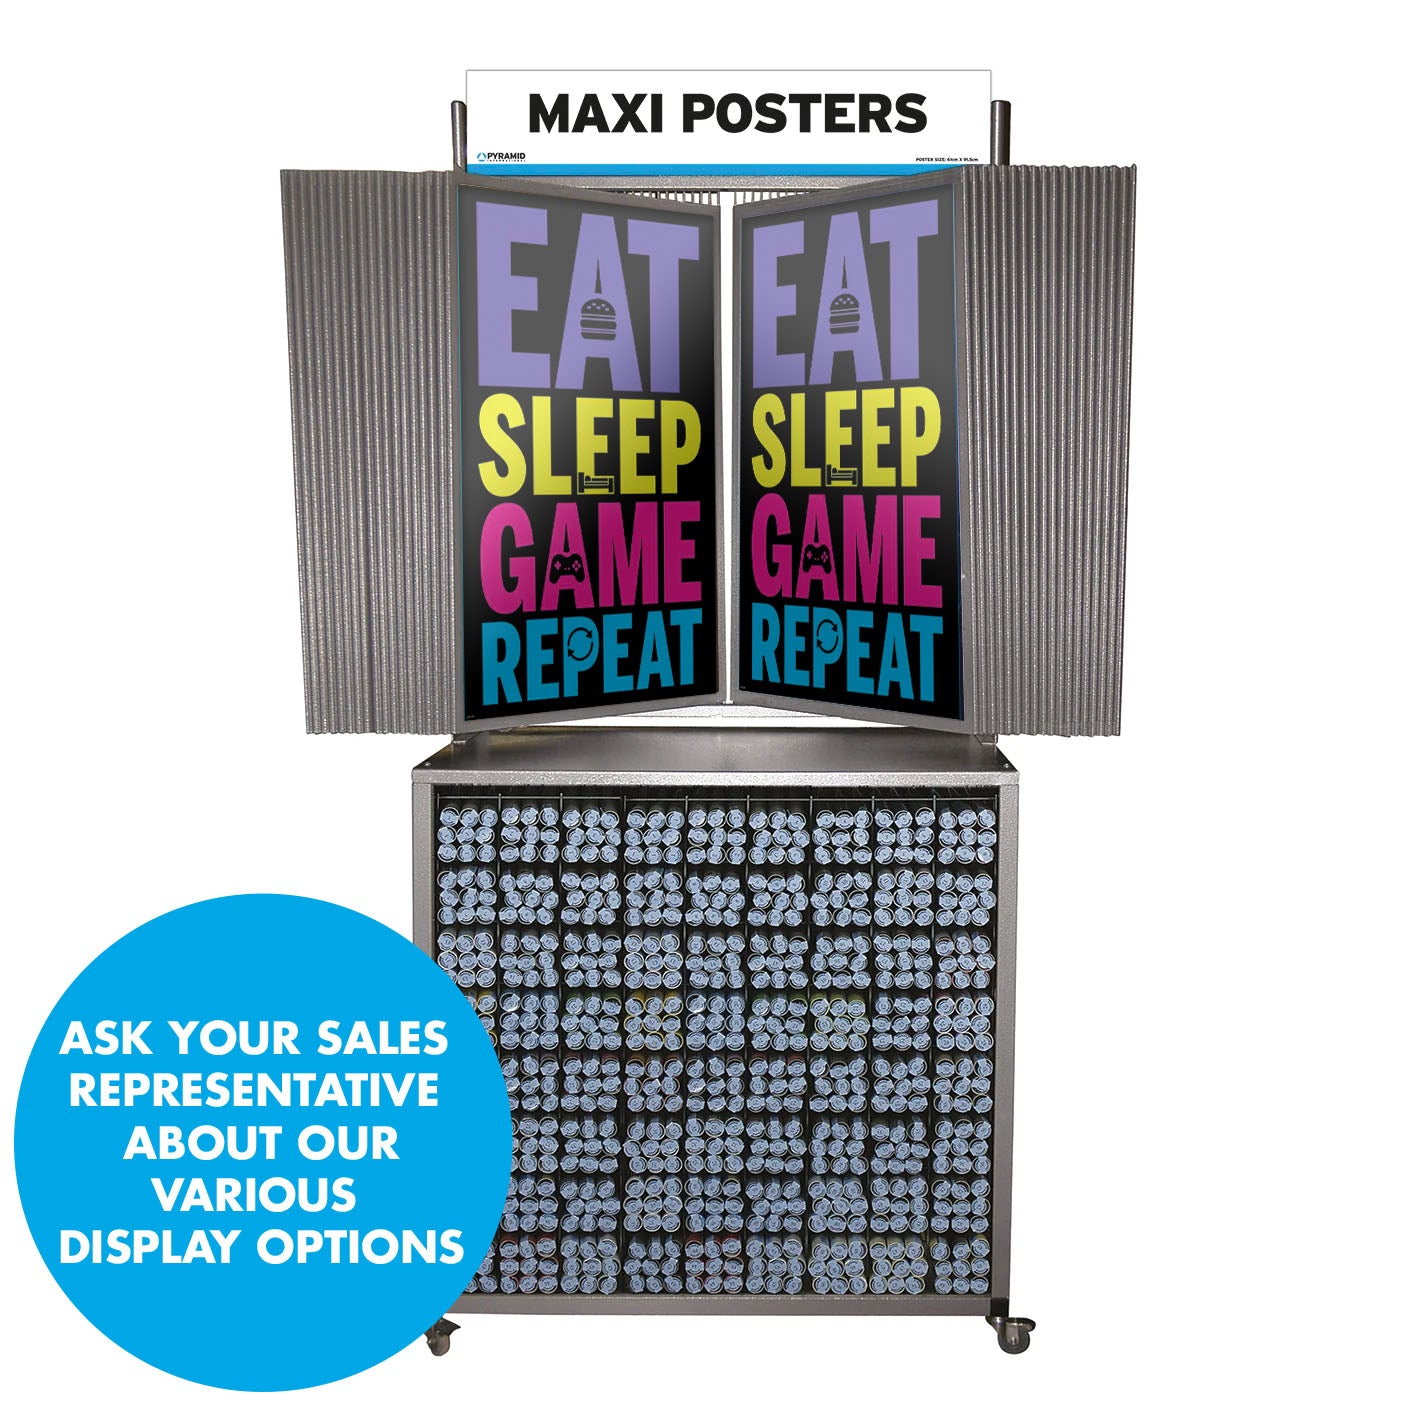 Eat, Sleep, – Repeat (Gaming) Pyramid Game, Maxi International Poster